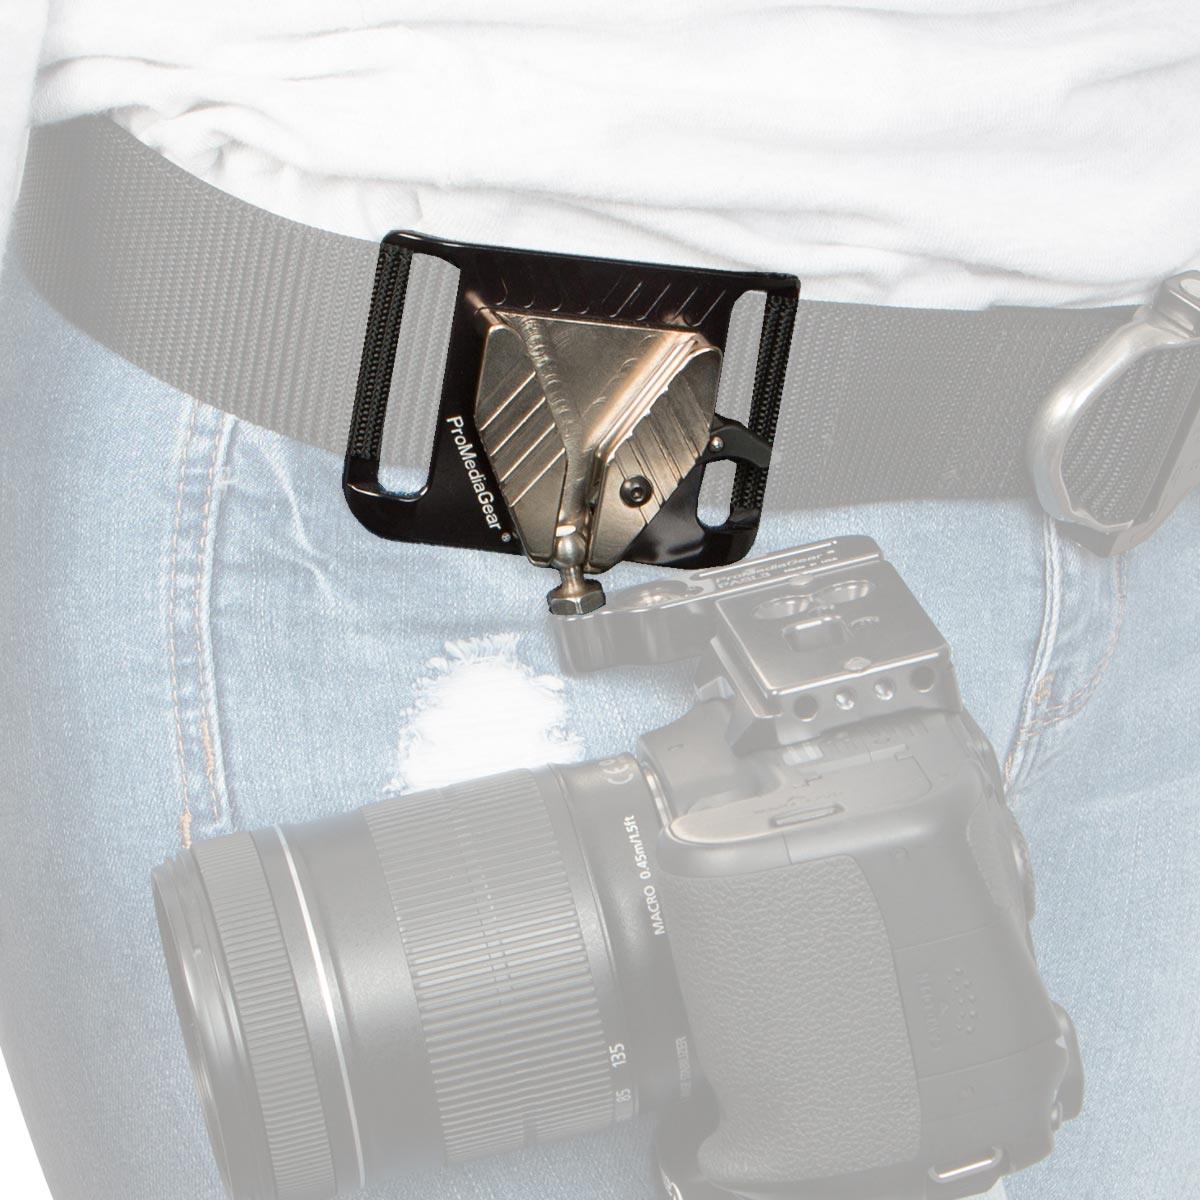 SH1-PAH1 Camera Holster for Belts